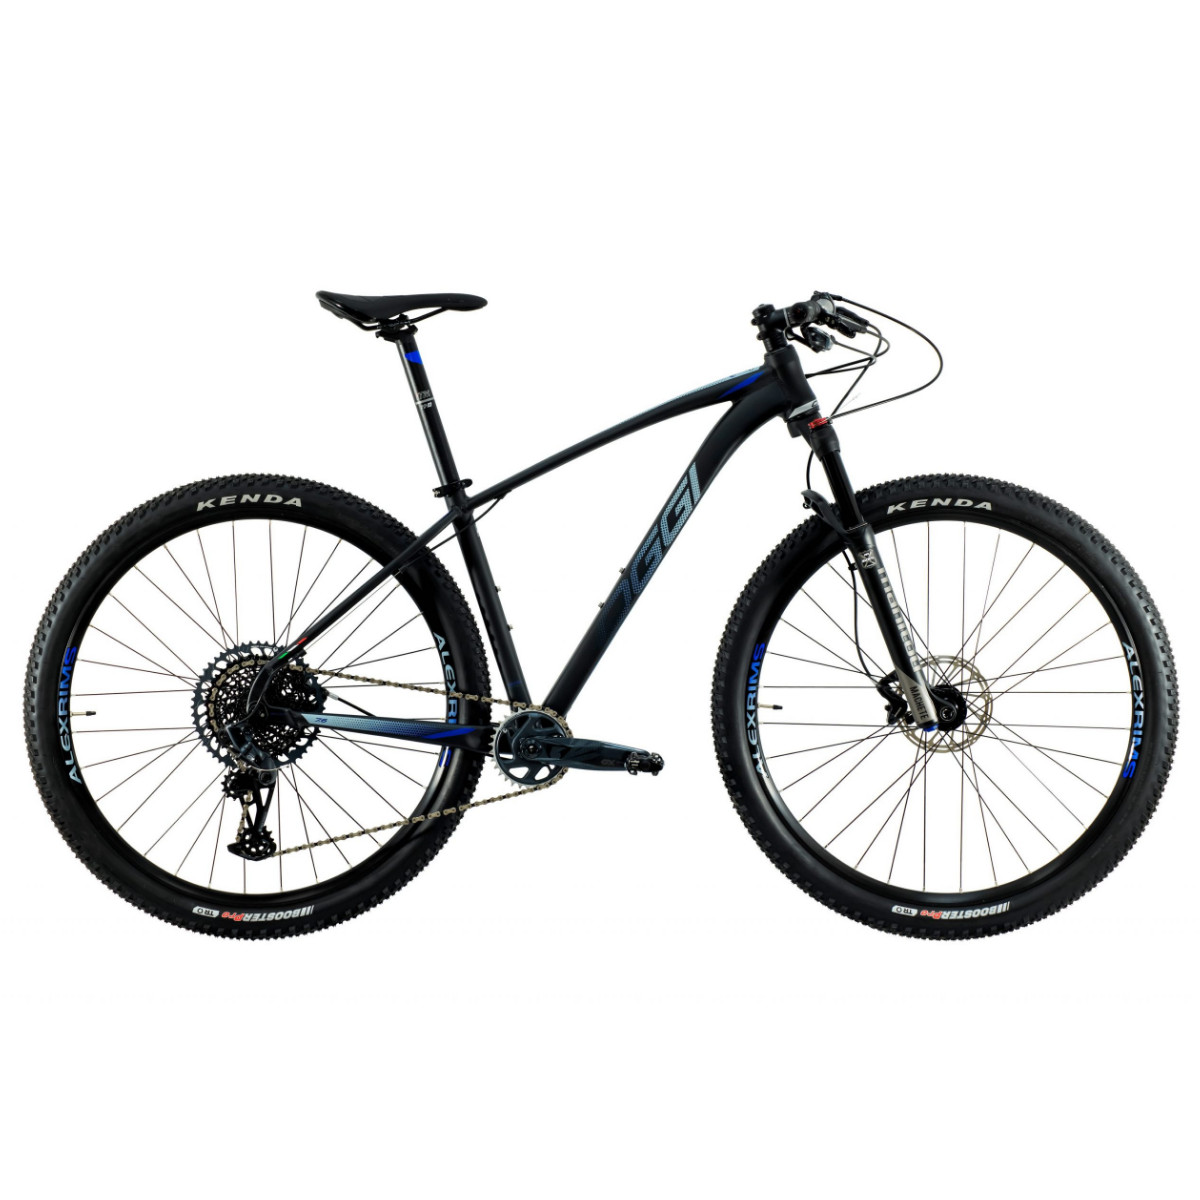 Bicicleta Oggi Big Wheel 7.6 GX 12V 2021 -  Preto Azul e Grafite